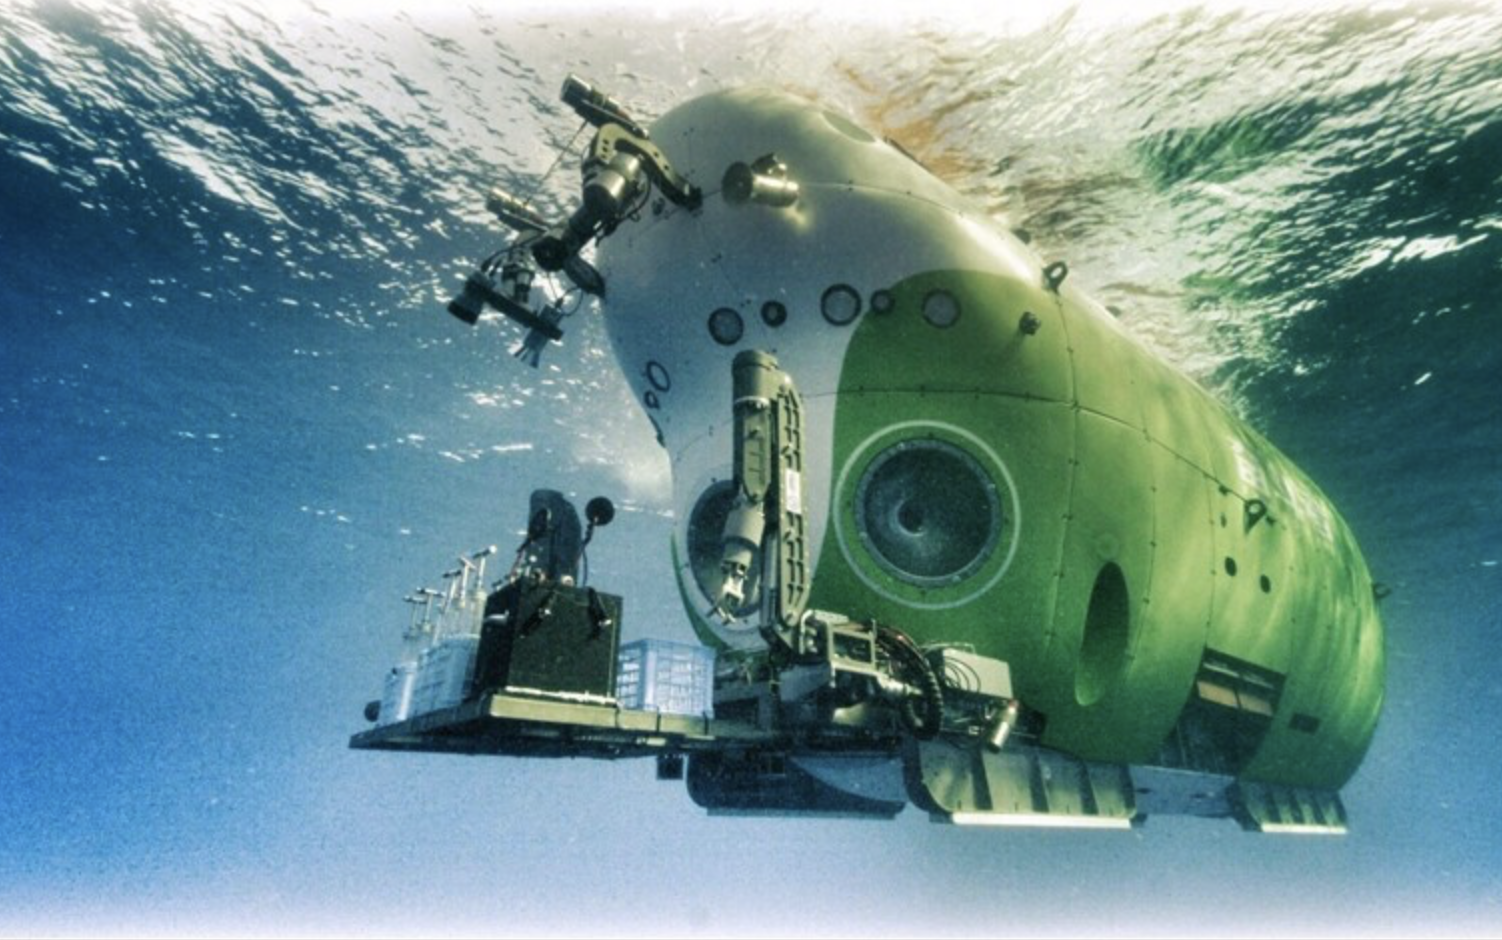 2020/11 History of China’s deep sea submersibles